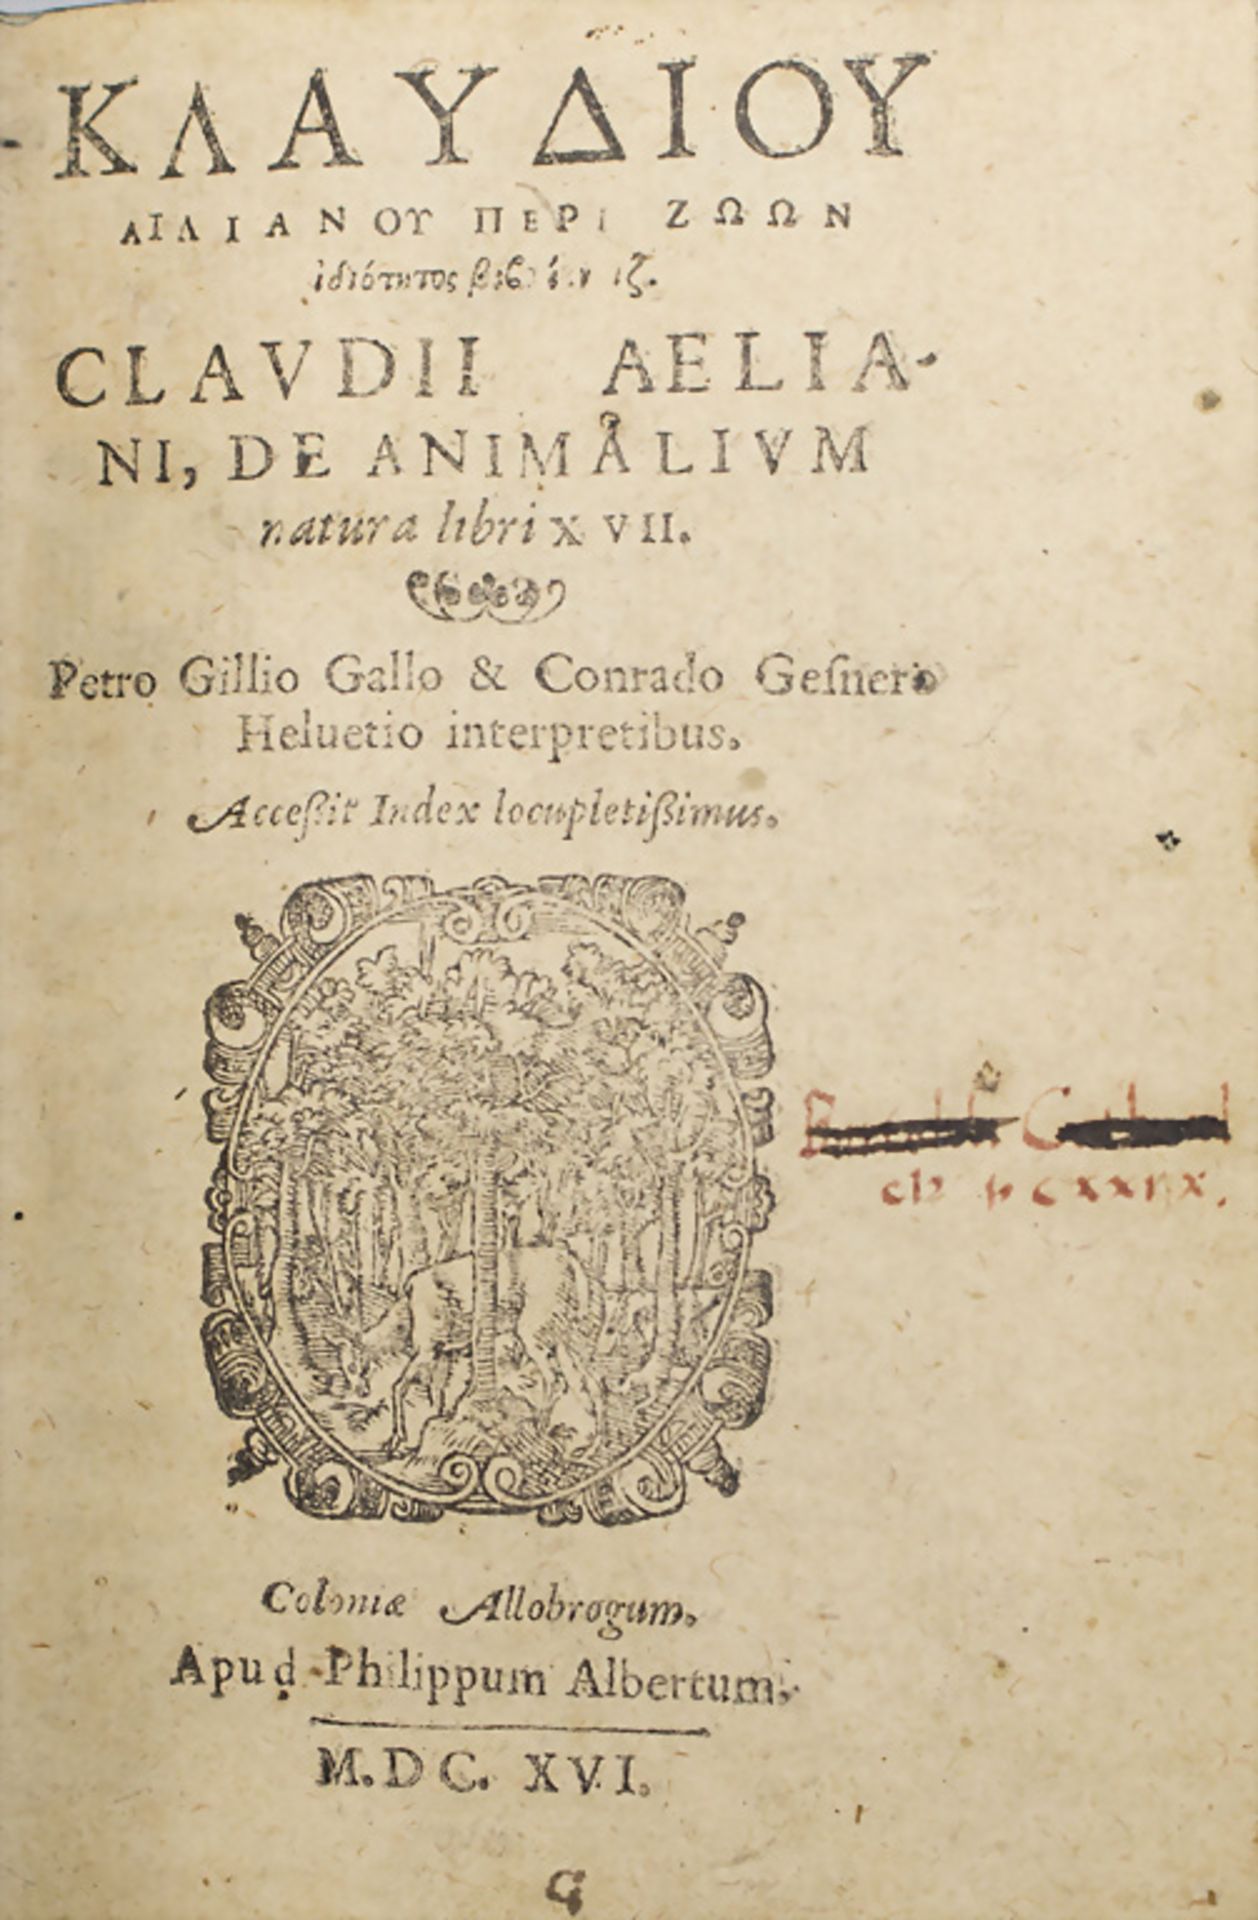 Clavdii Aeliani, de animalium, 1616